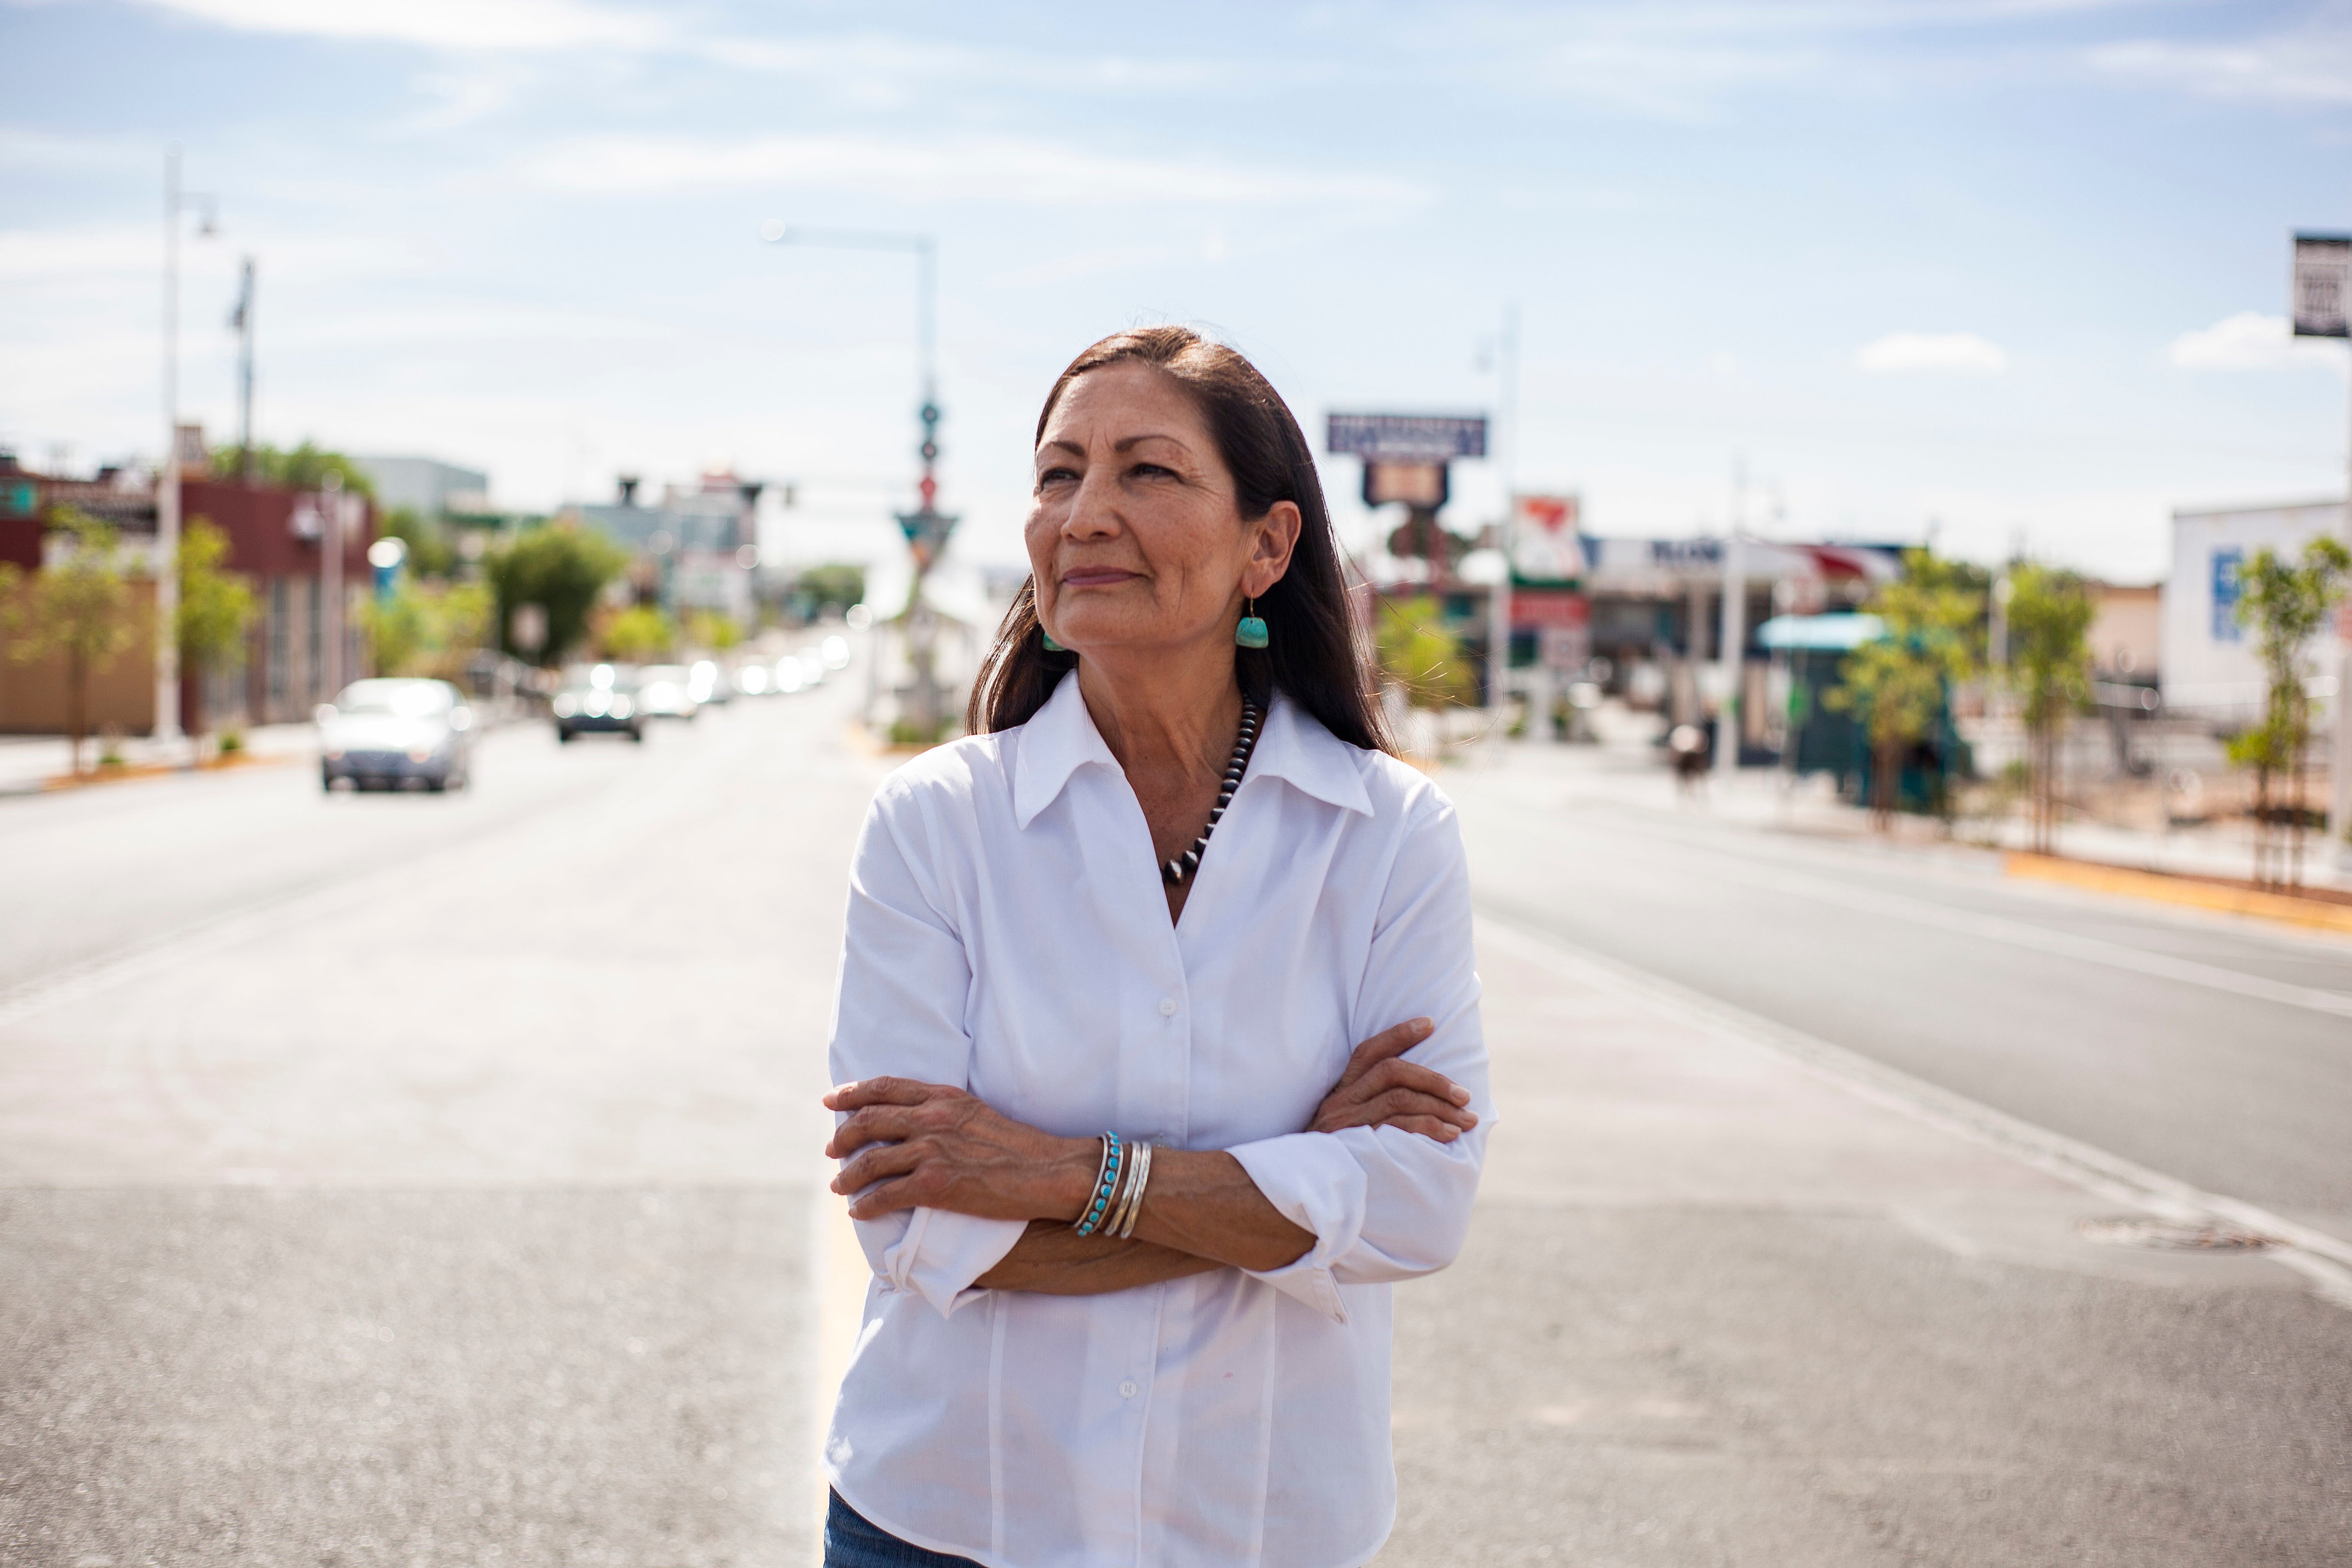 Deb Haaland poses for a portrait in Albuquerque, N.M., on June 4, 2018. (Juan Labreche—AP//Shutterstock)